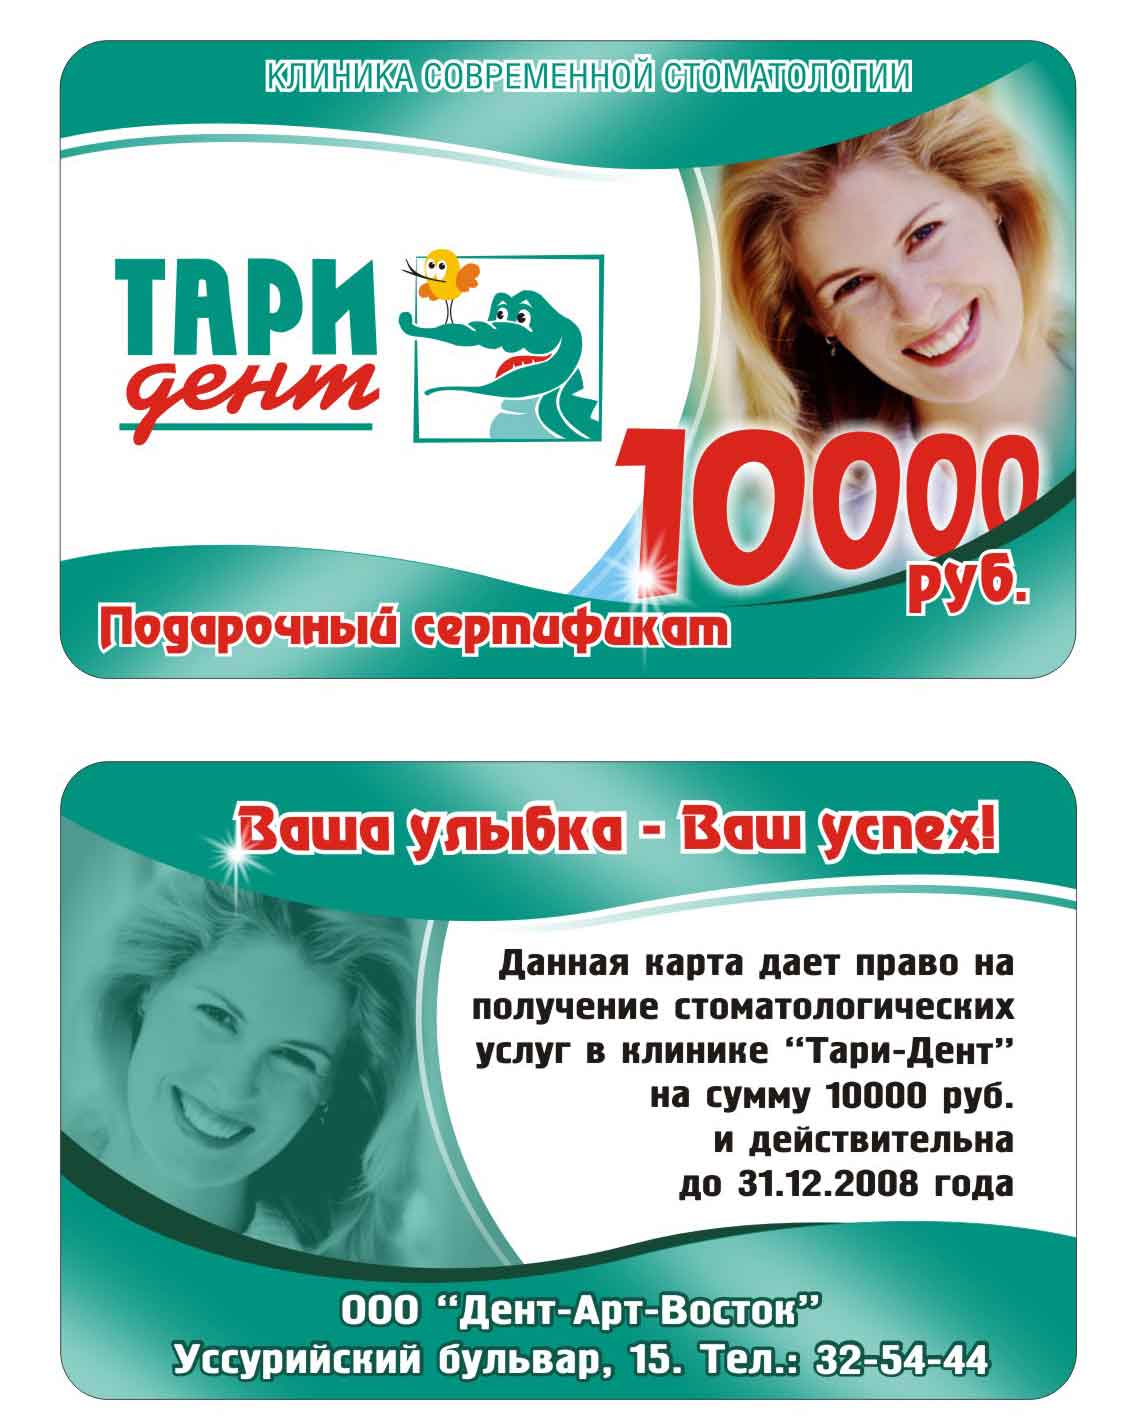 Тари-дент подарочная на 10000 руб